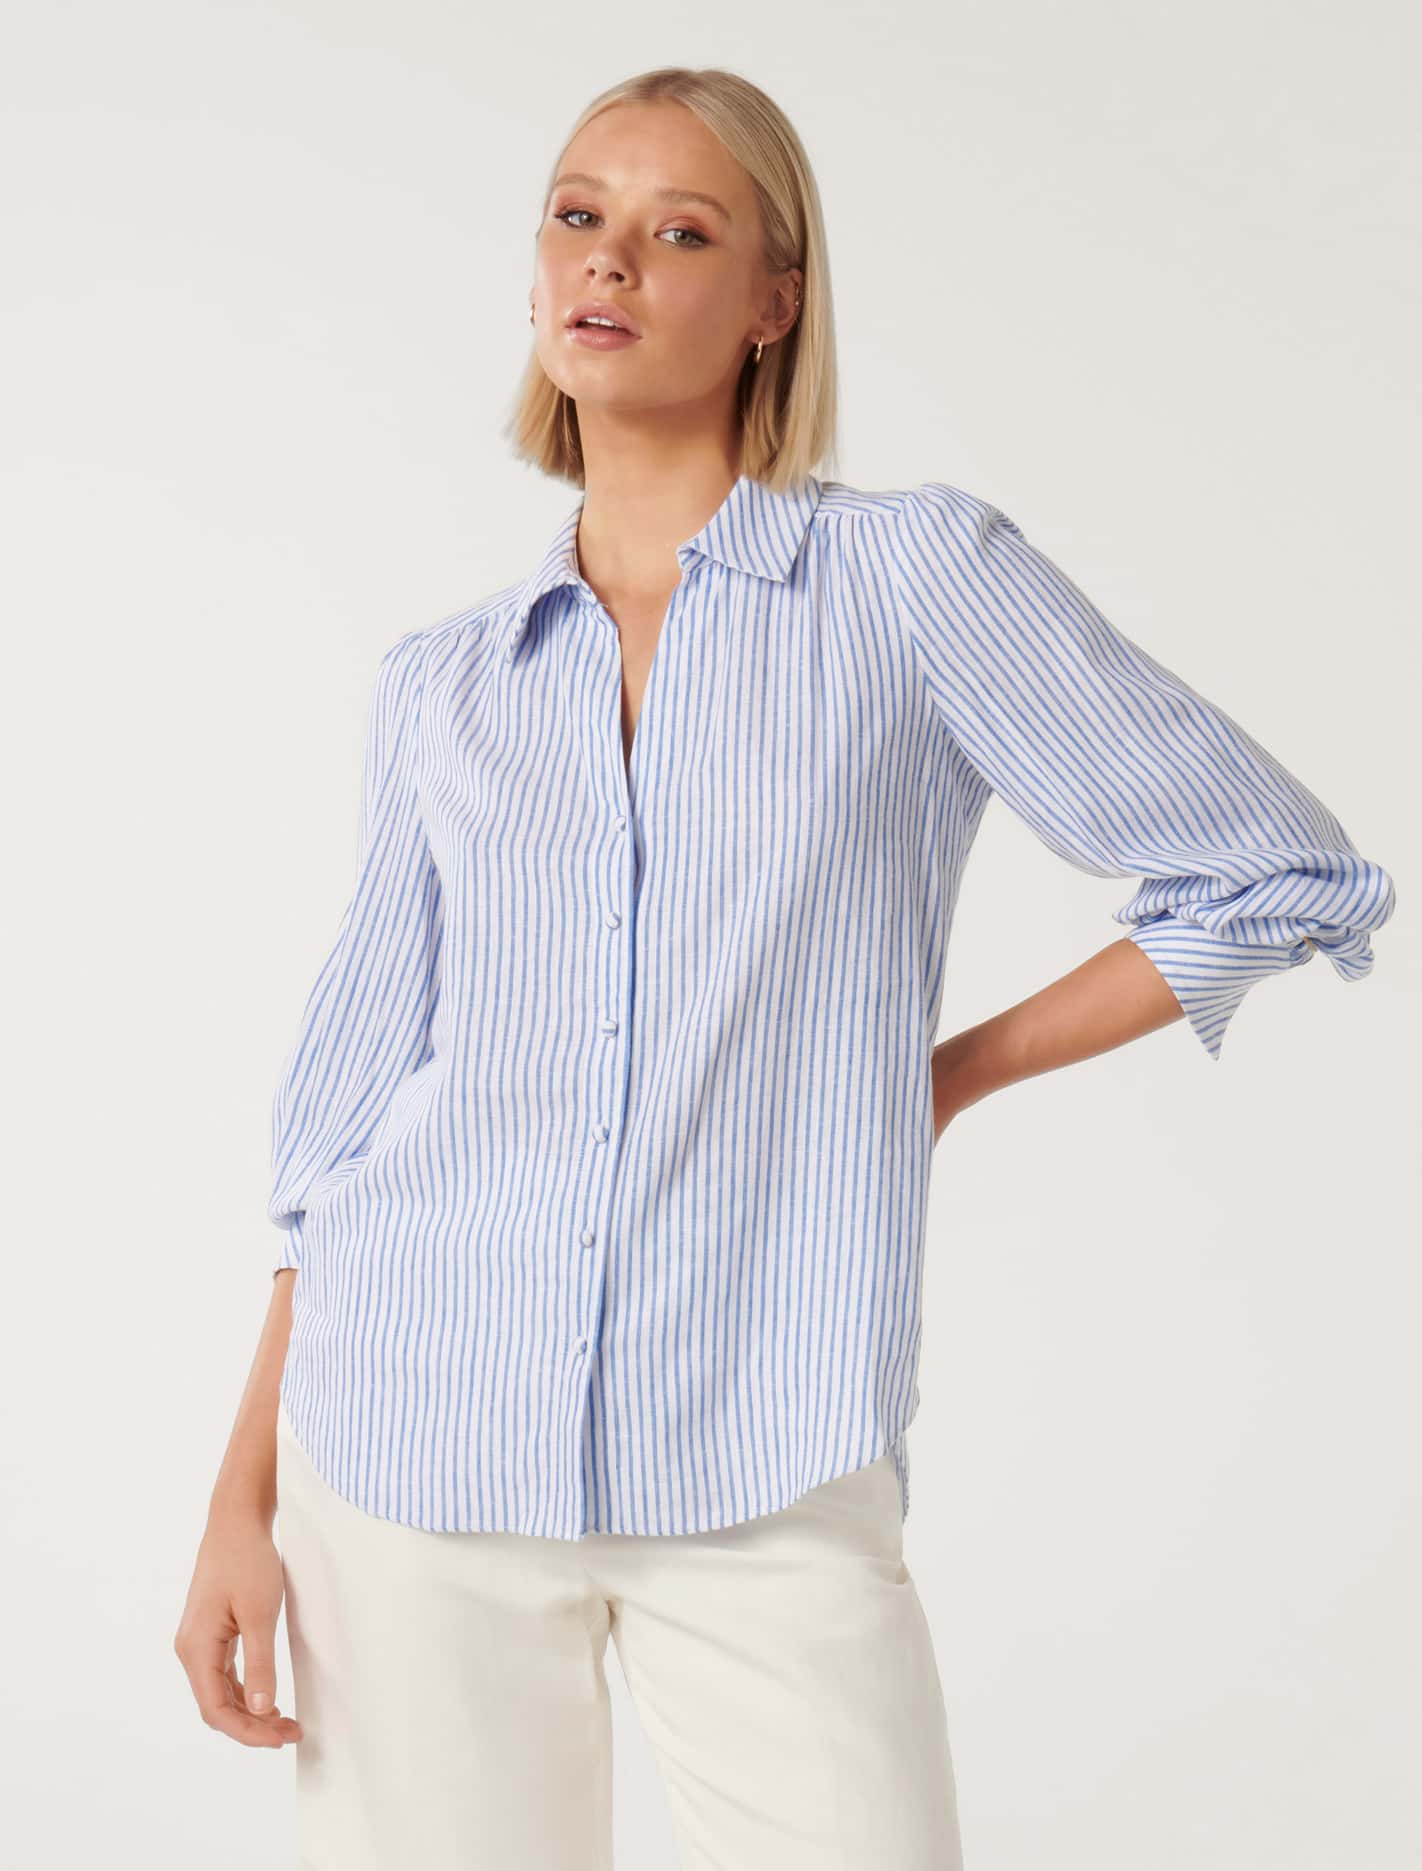 Petite Women's Woven Linen Blue Stripe Sleeveless Top